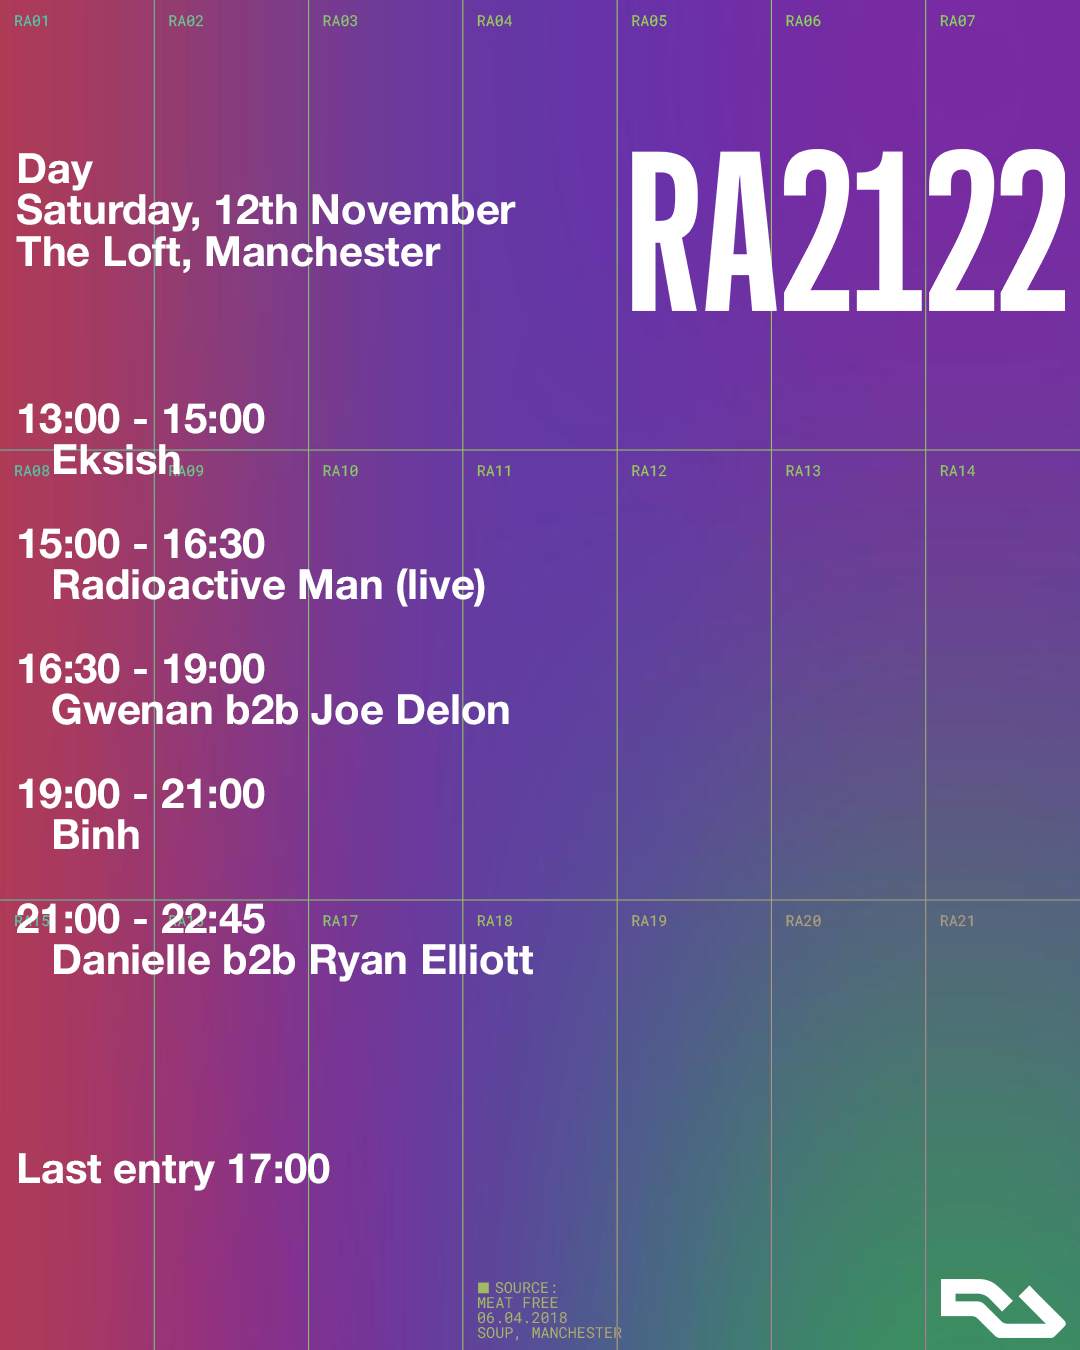 RA2122 - Day: Danielle b2b Ryan Elliott, Binh, Radioactive Man (live) & more - フライヤー表